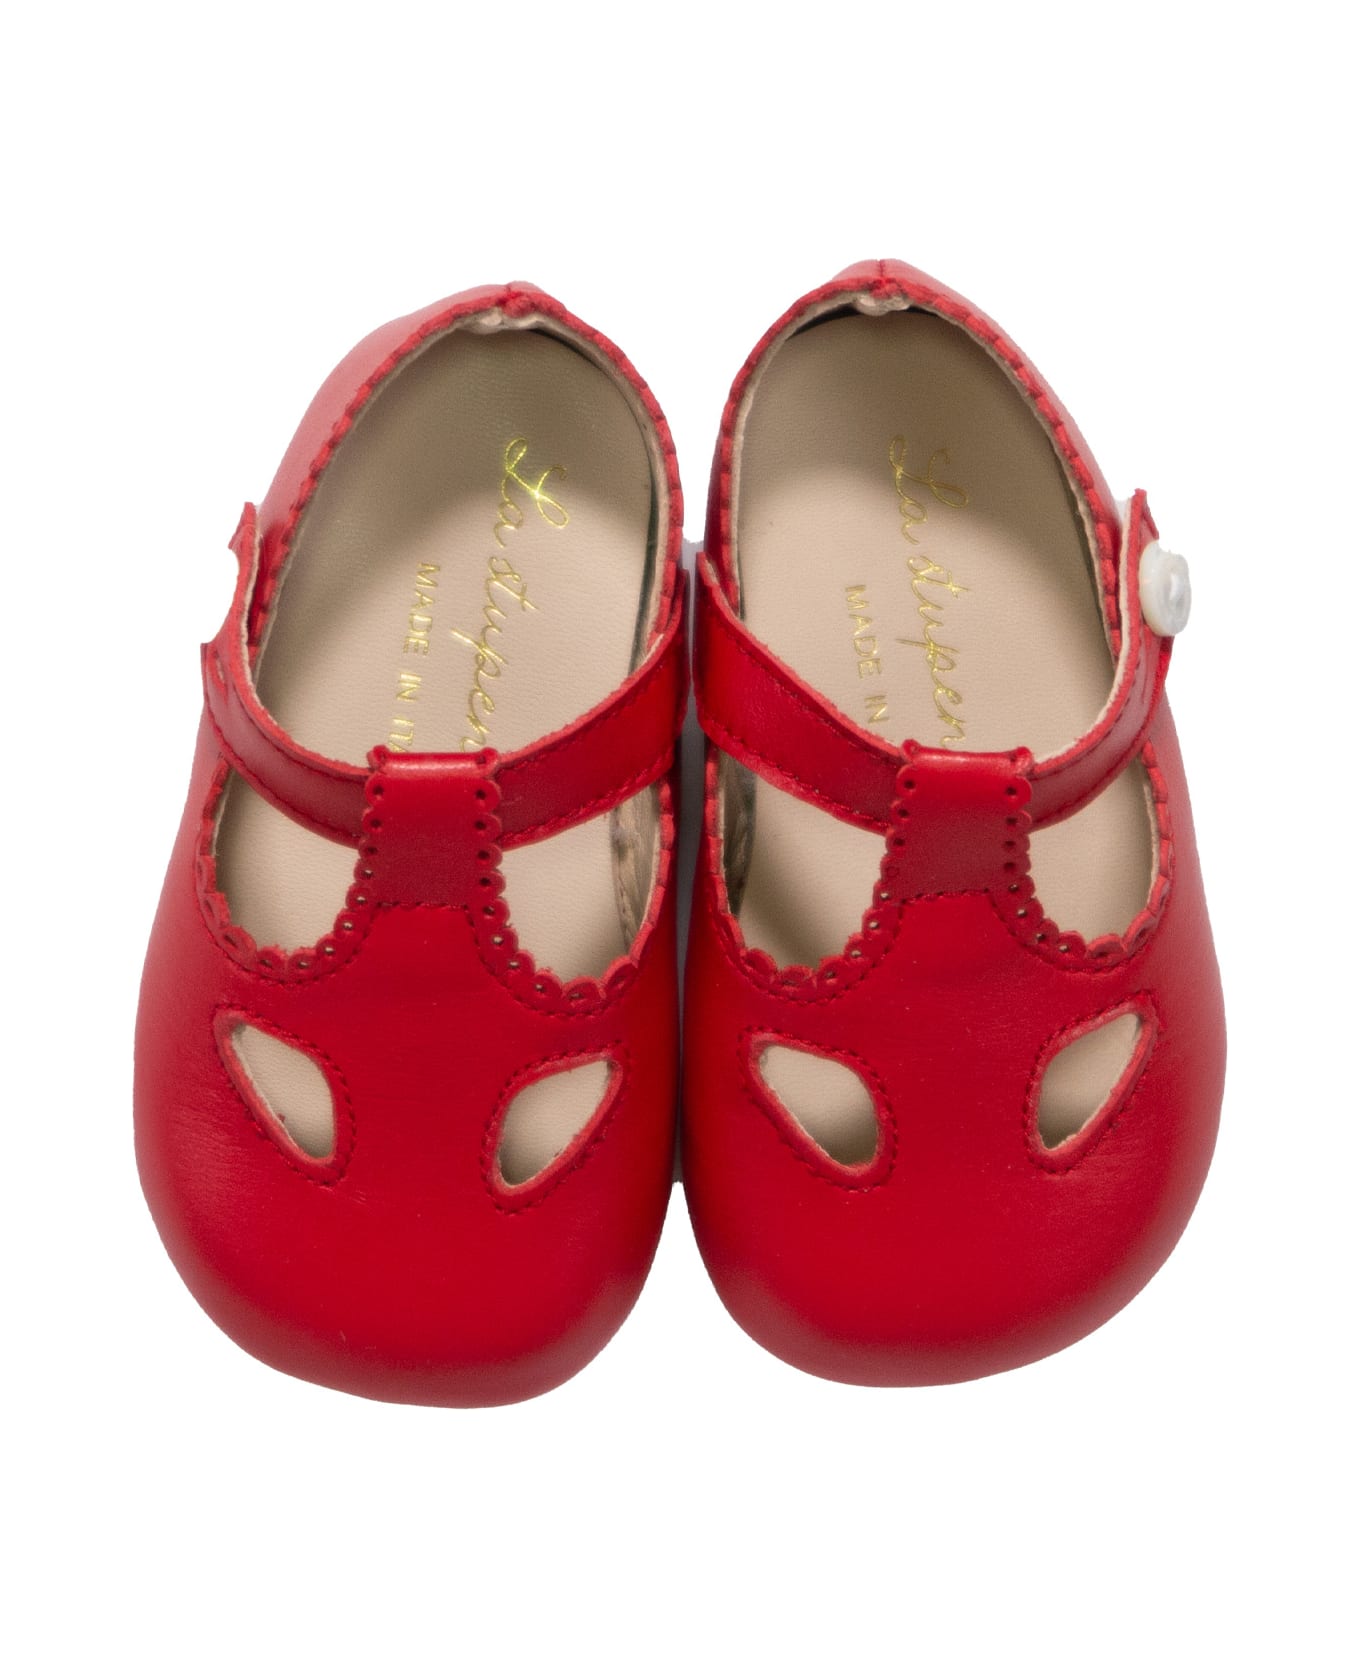 La stupenderia Leather Shoes - Red シューズ